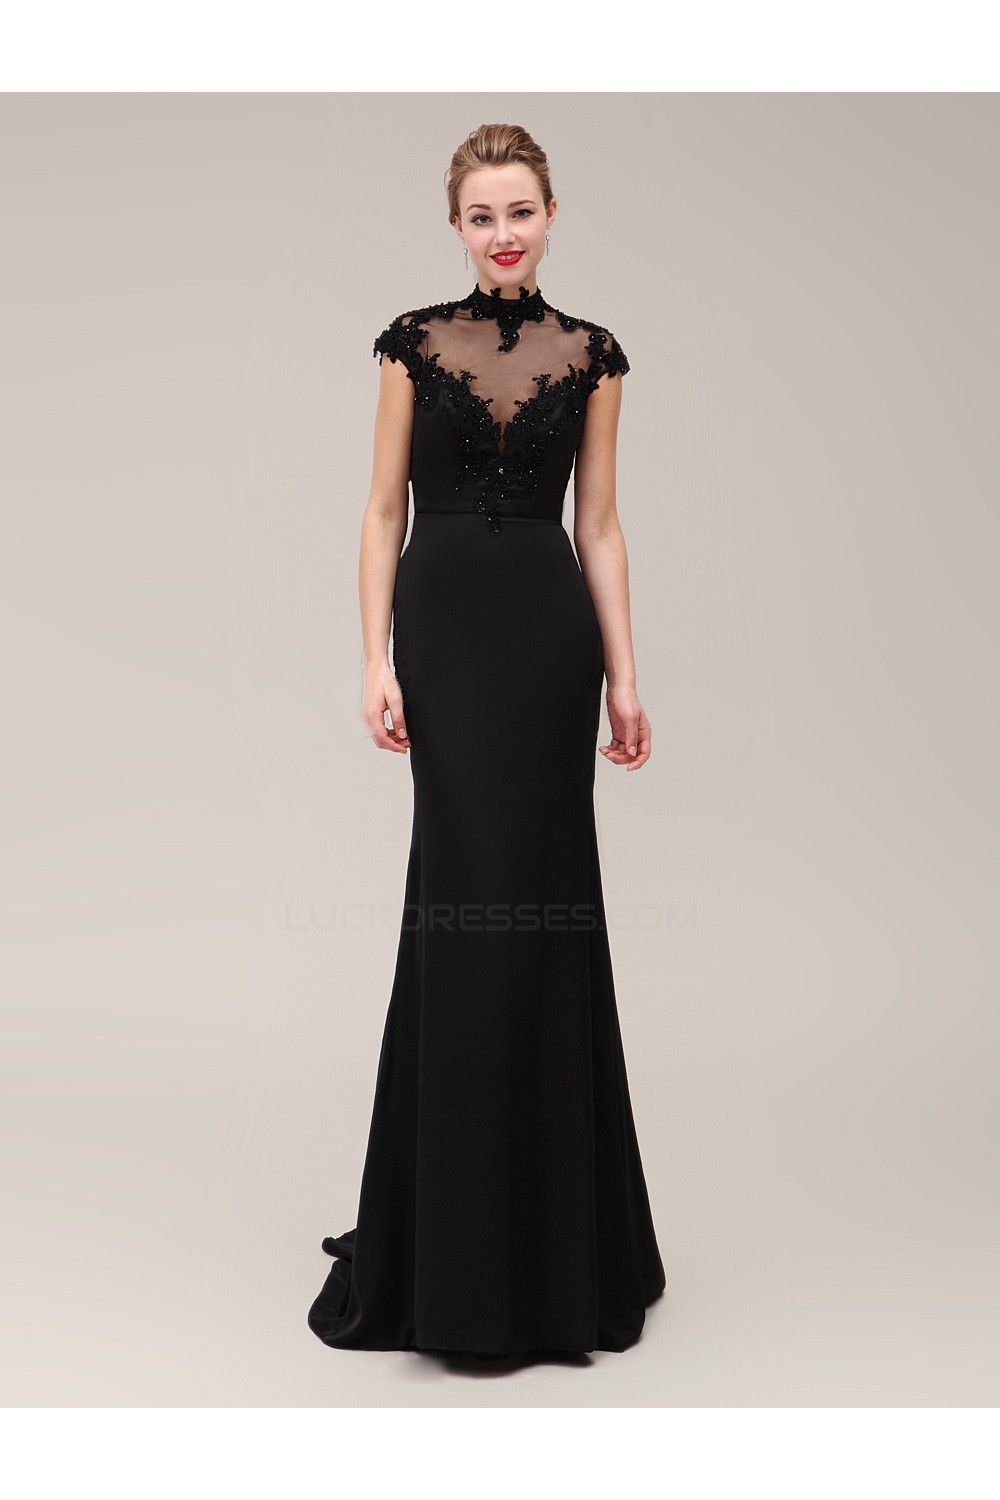 high neck black dress long